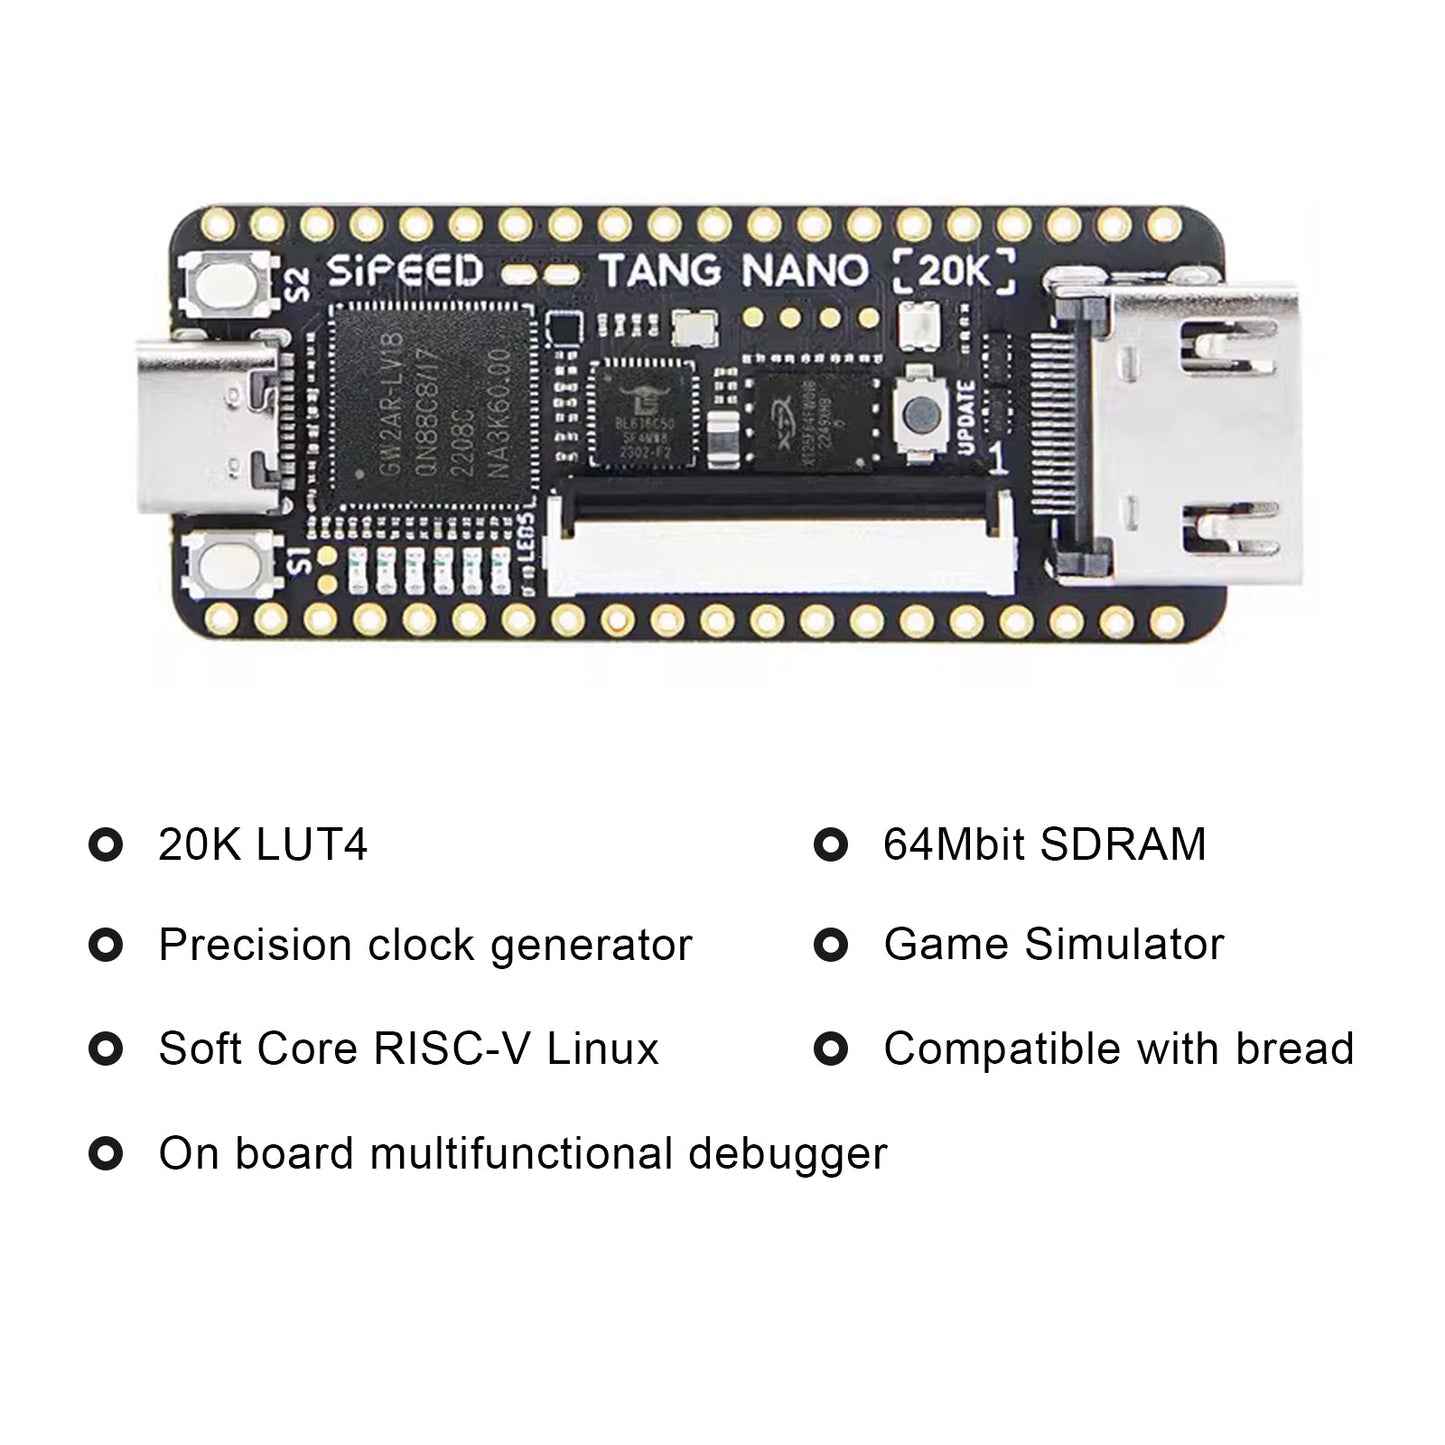 Sipeed Tang Nano 20K Development Board Open Source FPGA Retro Game with Speaker